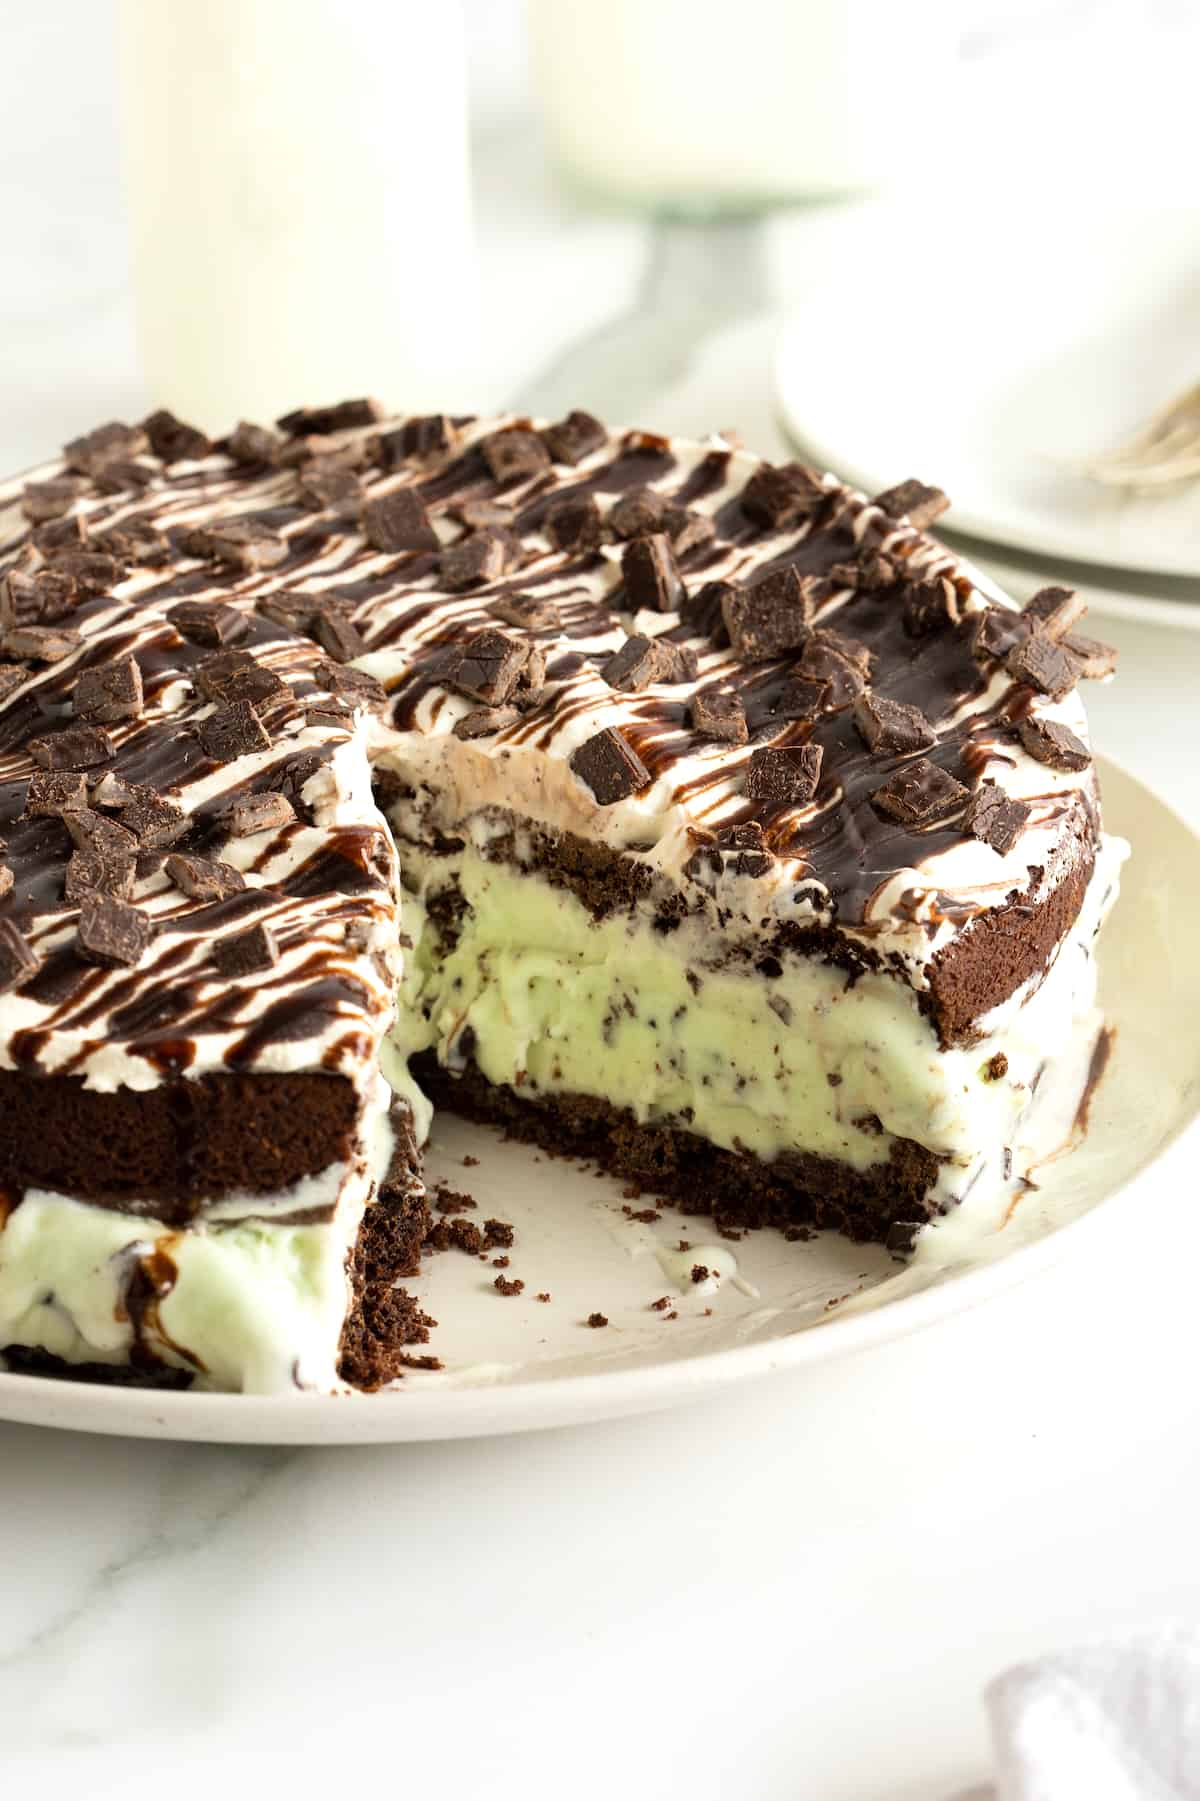 An ice cream cake made with mint chocolate chip ice cream and an Oreo crust.